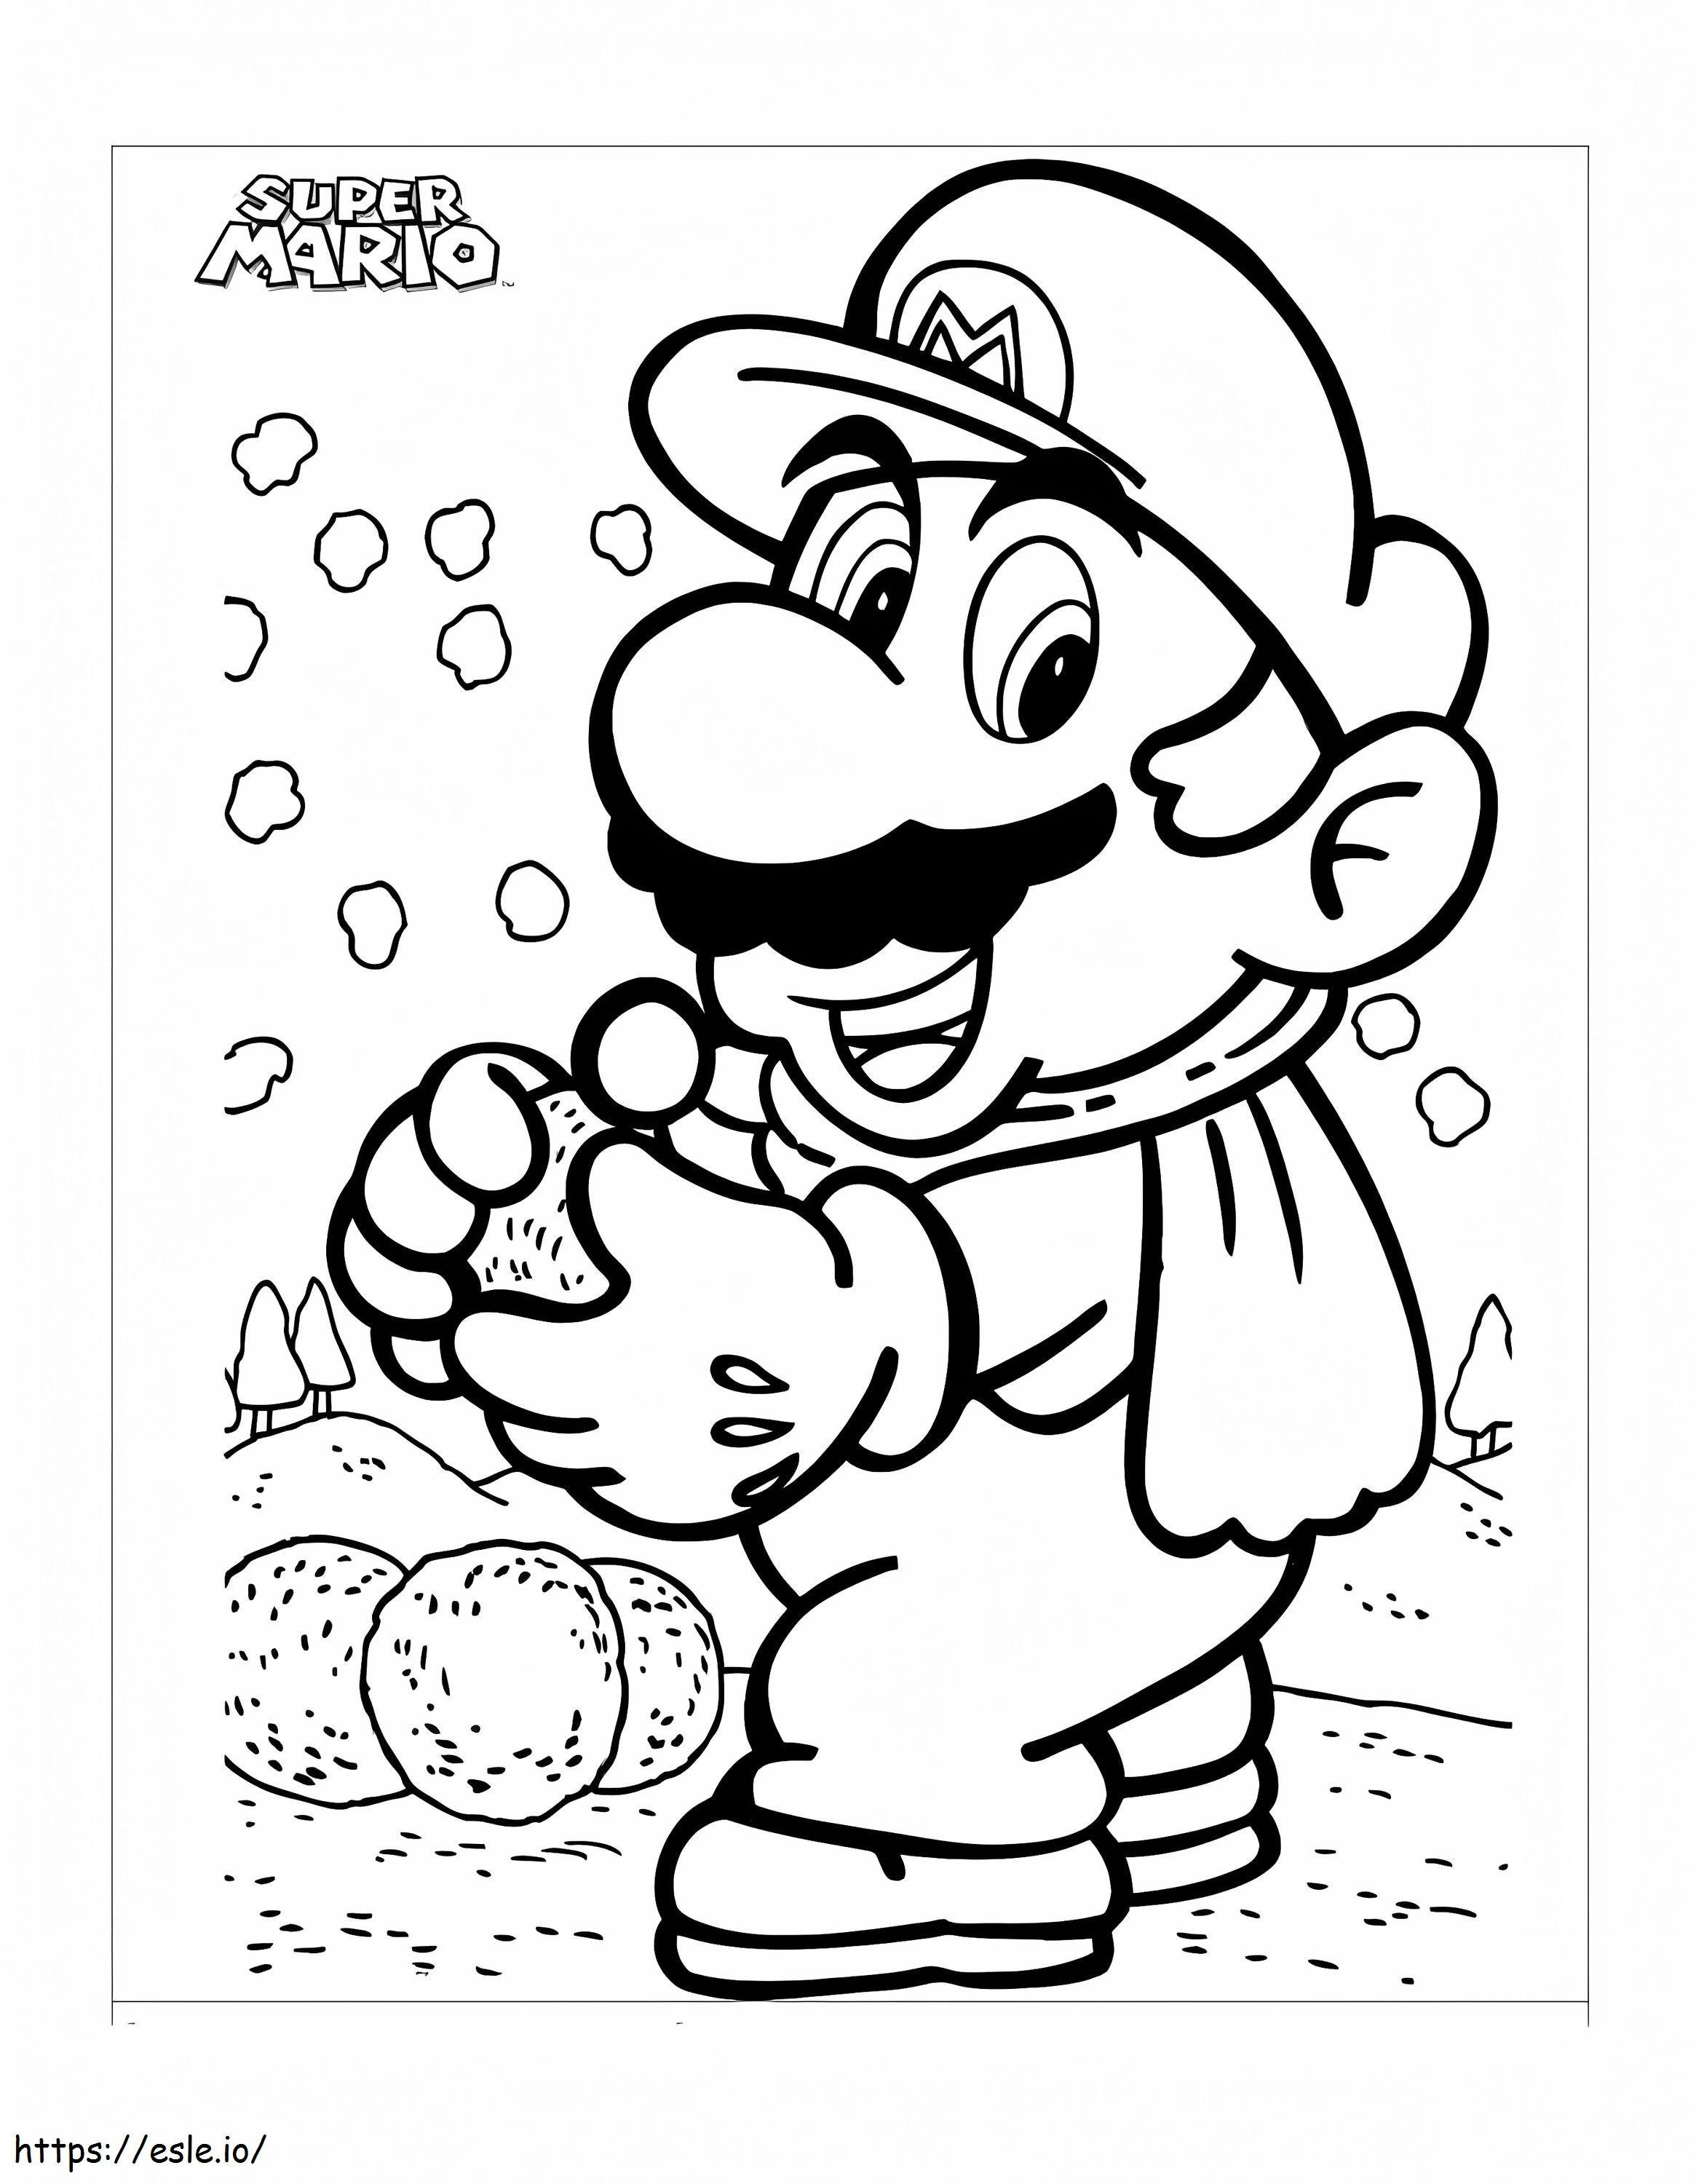 Mario With Snowballs coloring page